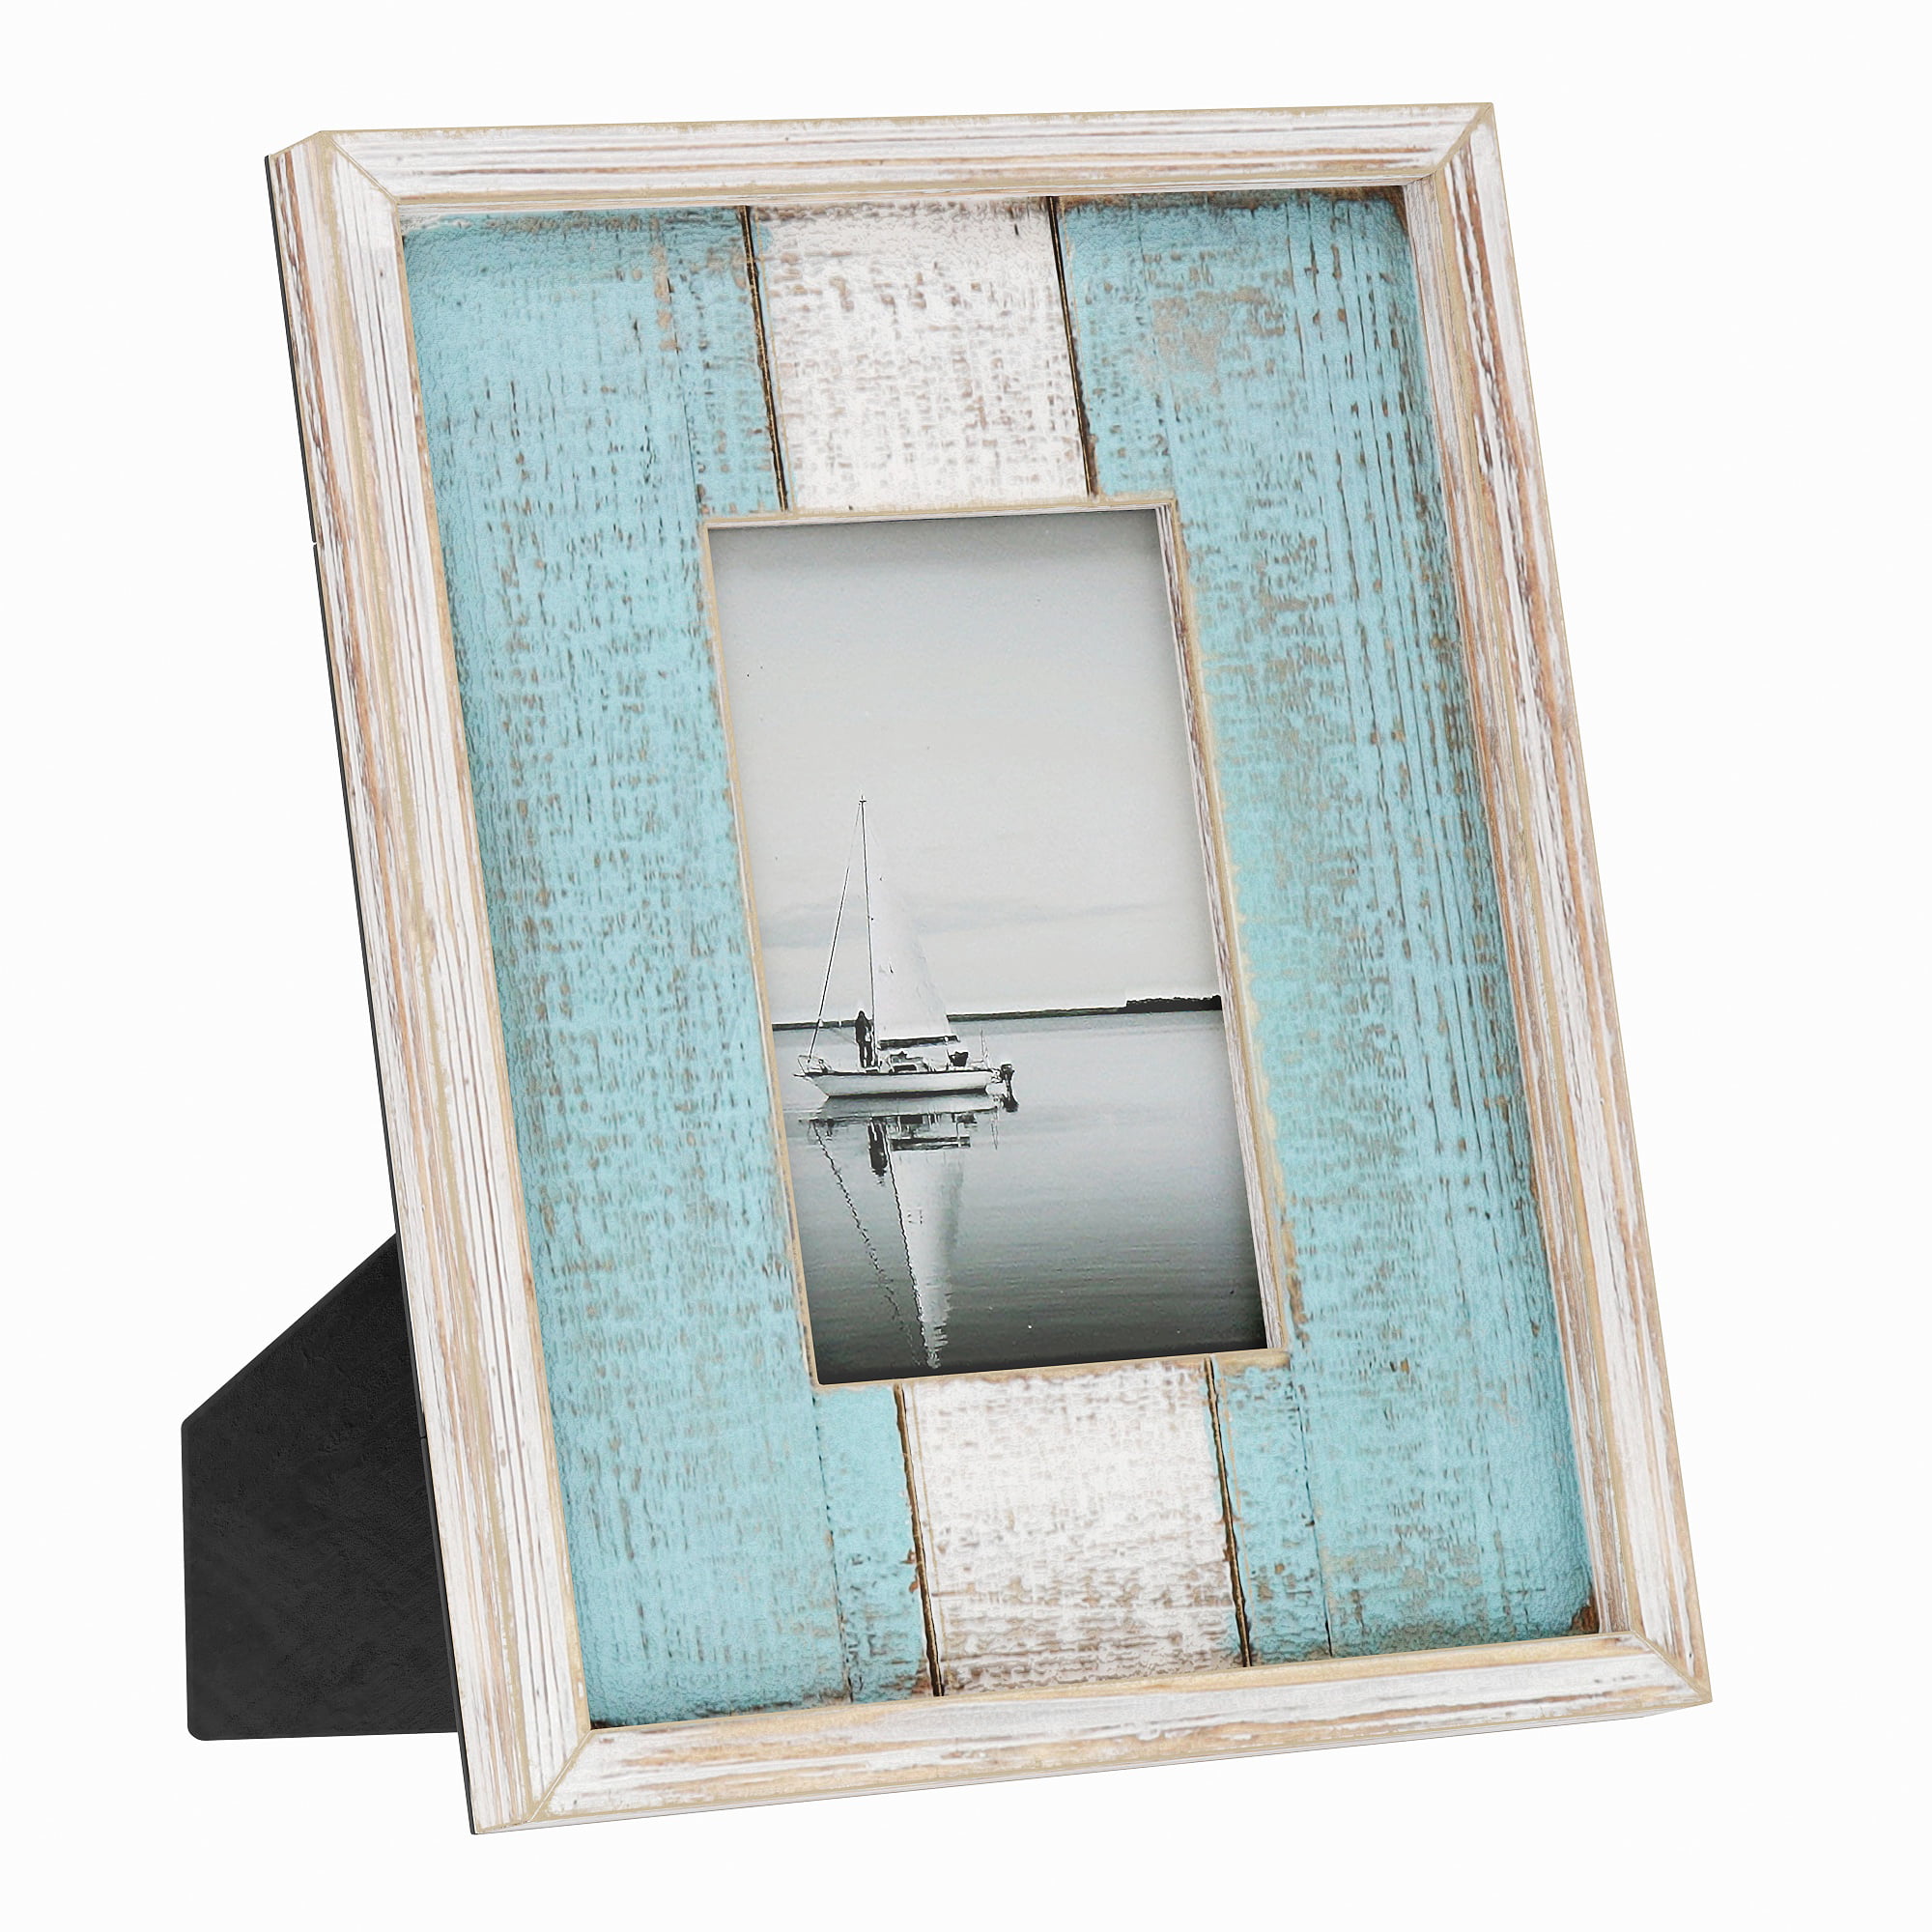 Rustic Frames-4x6 Alder Wood & Barnwood Frame - Sagebrush Series